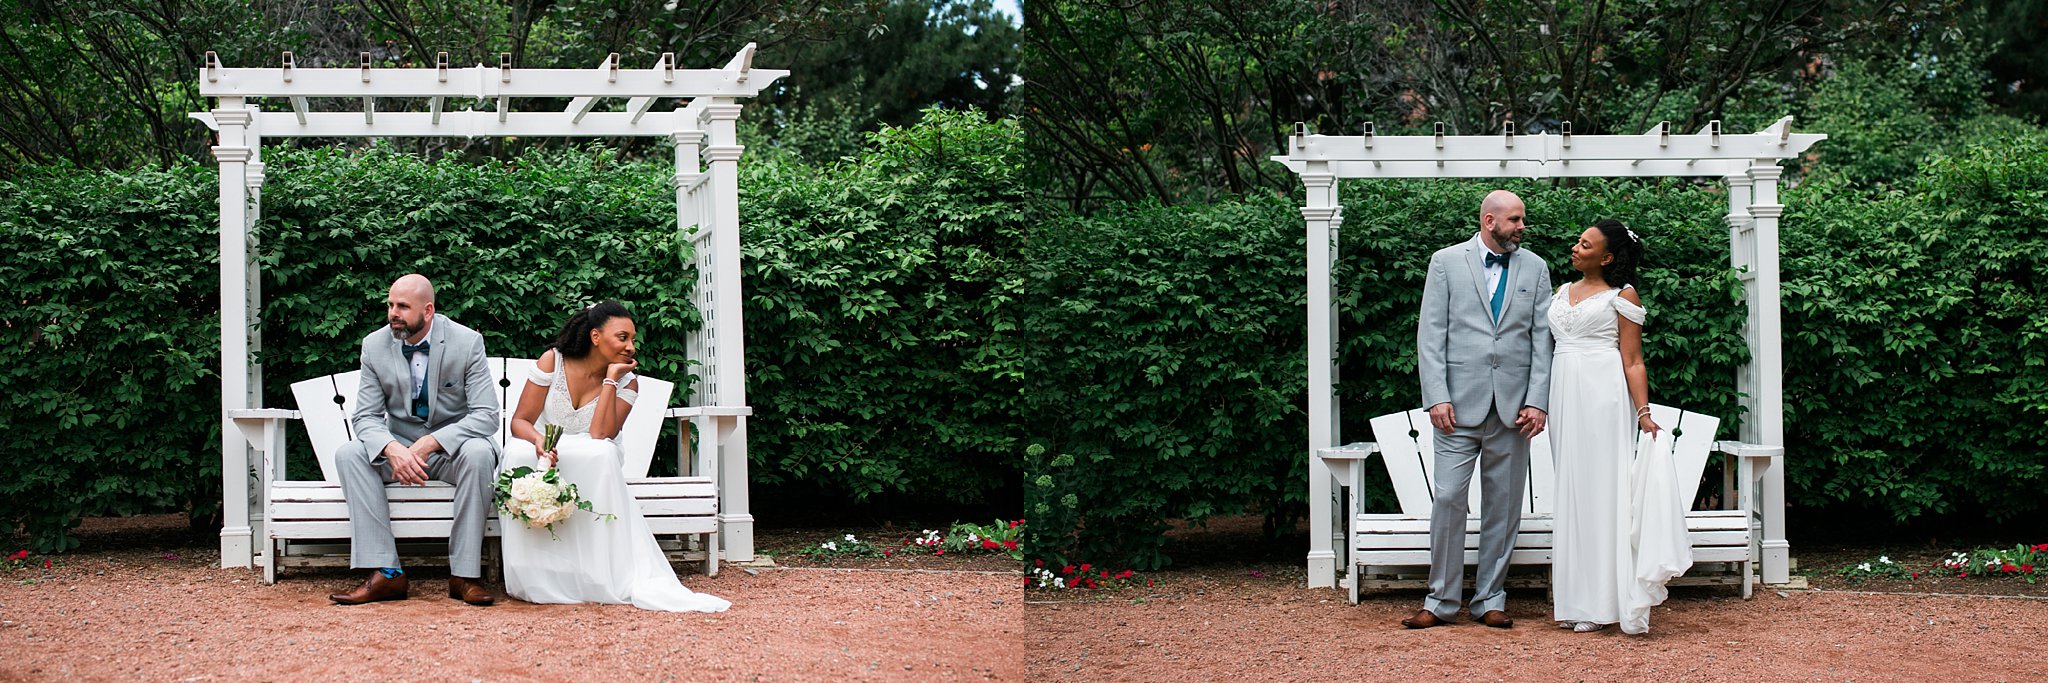 Jennifer Blaak Photography, Toronto Wedding Photographer, C Banquets, Bride and Groom on white bench